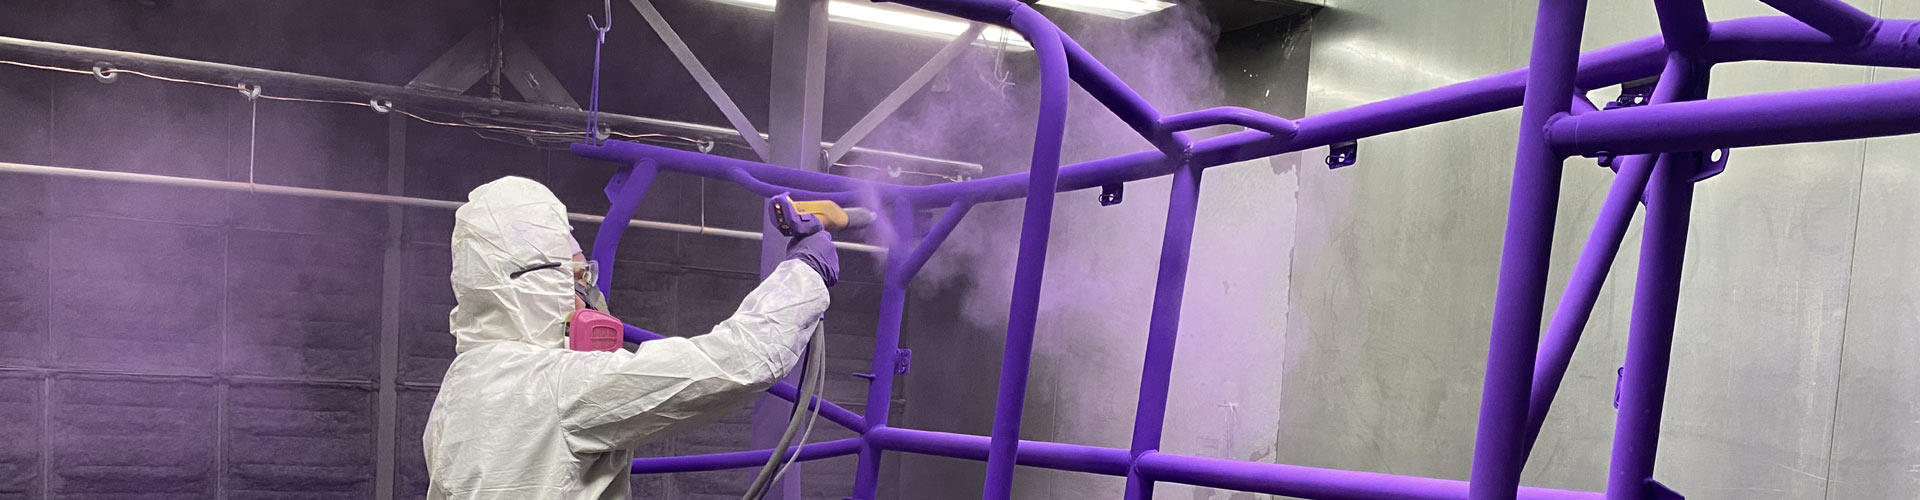 person applying purple powder coat to metal bars